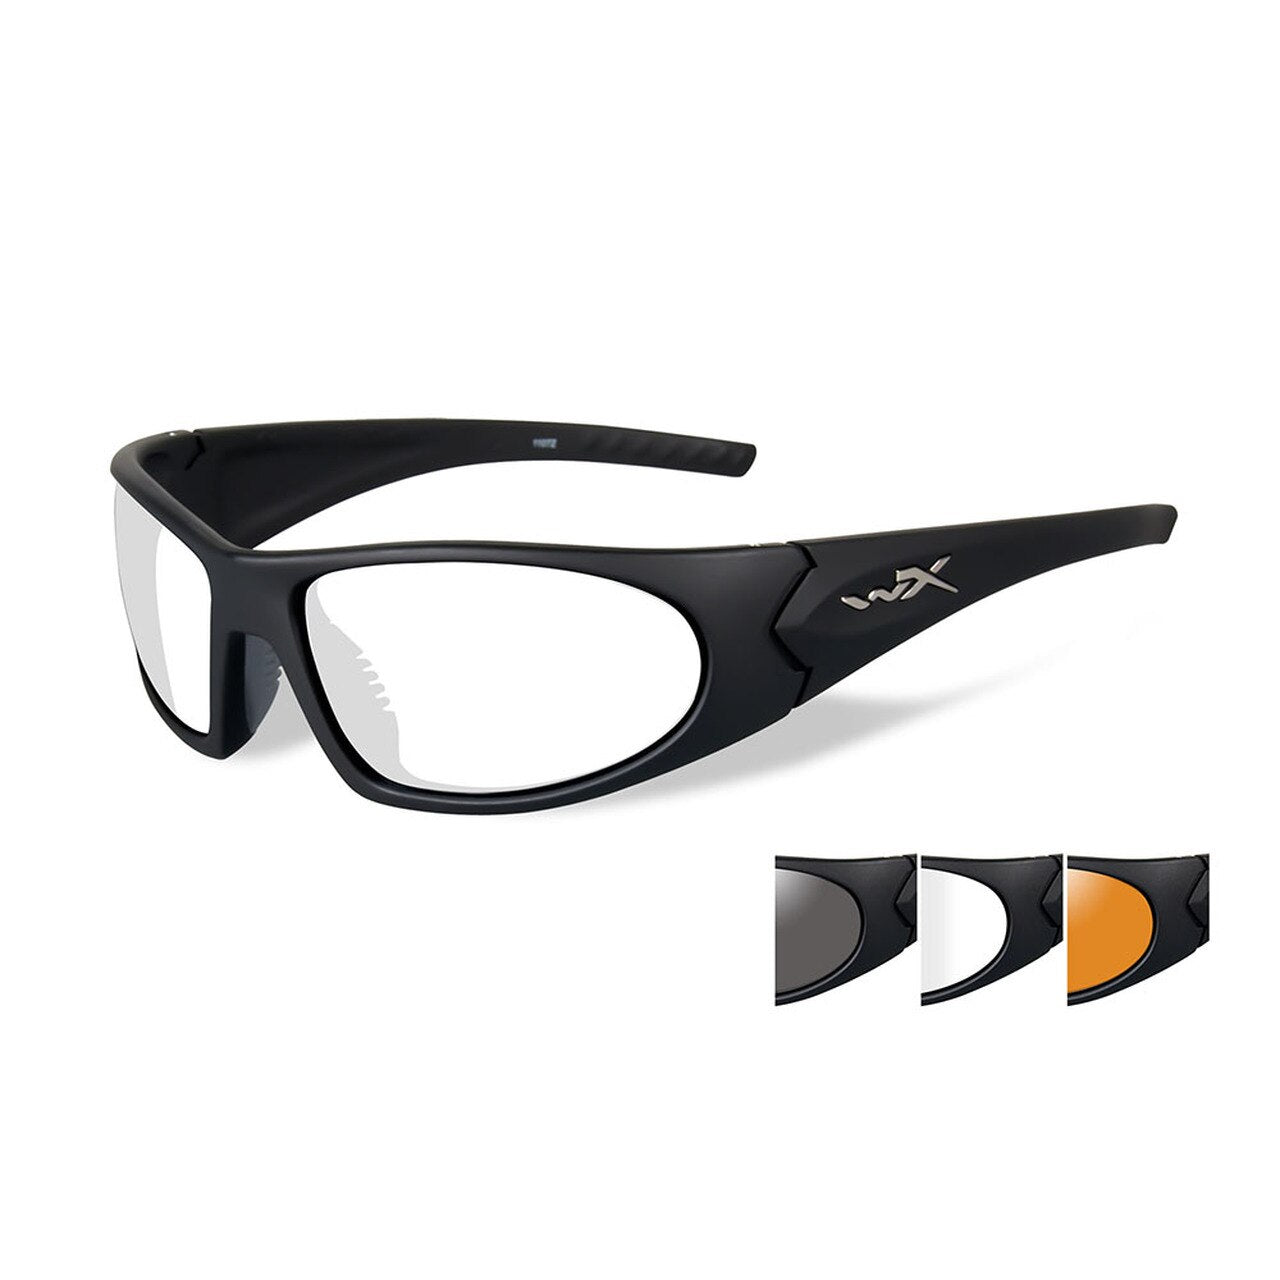 Wiley X Romer 3 Sunglasses Three Lens Matte Black Frame Eyewear Wiley X Tactical Gear Supplier Tactical Distributors Australia